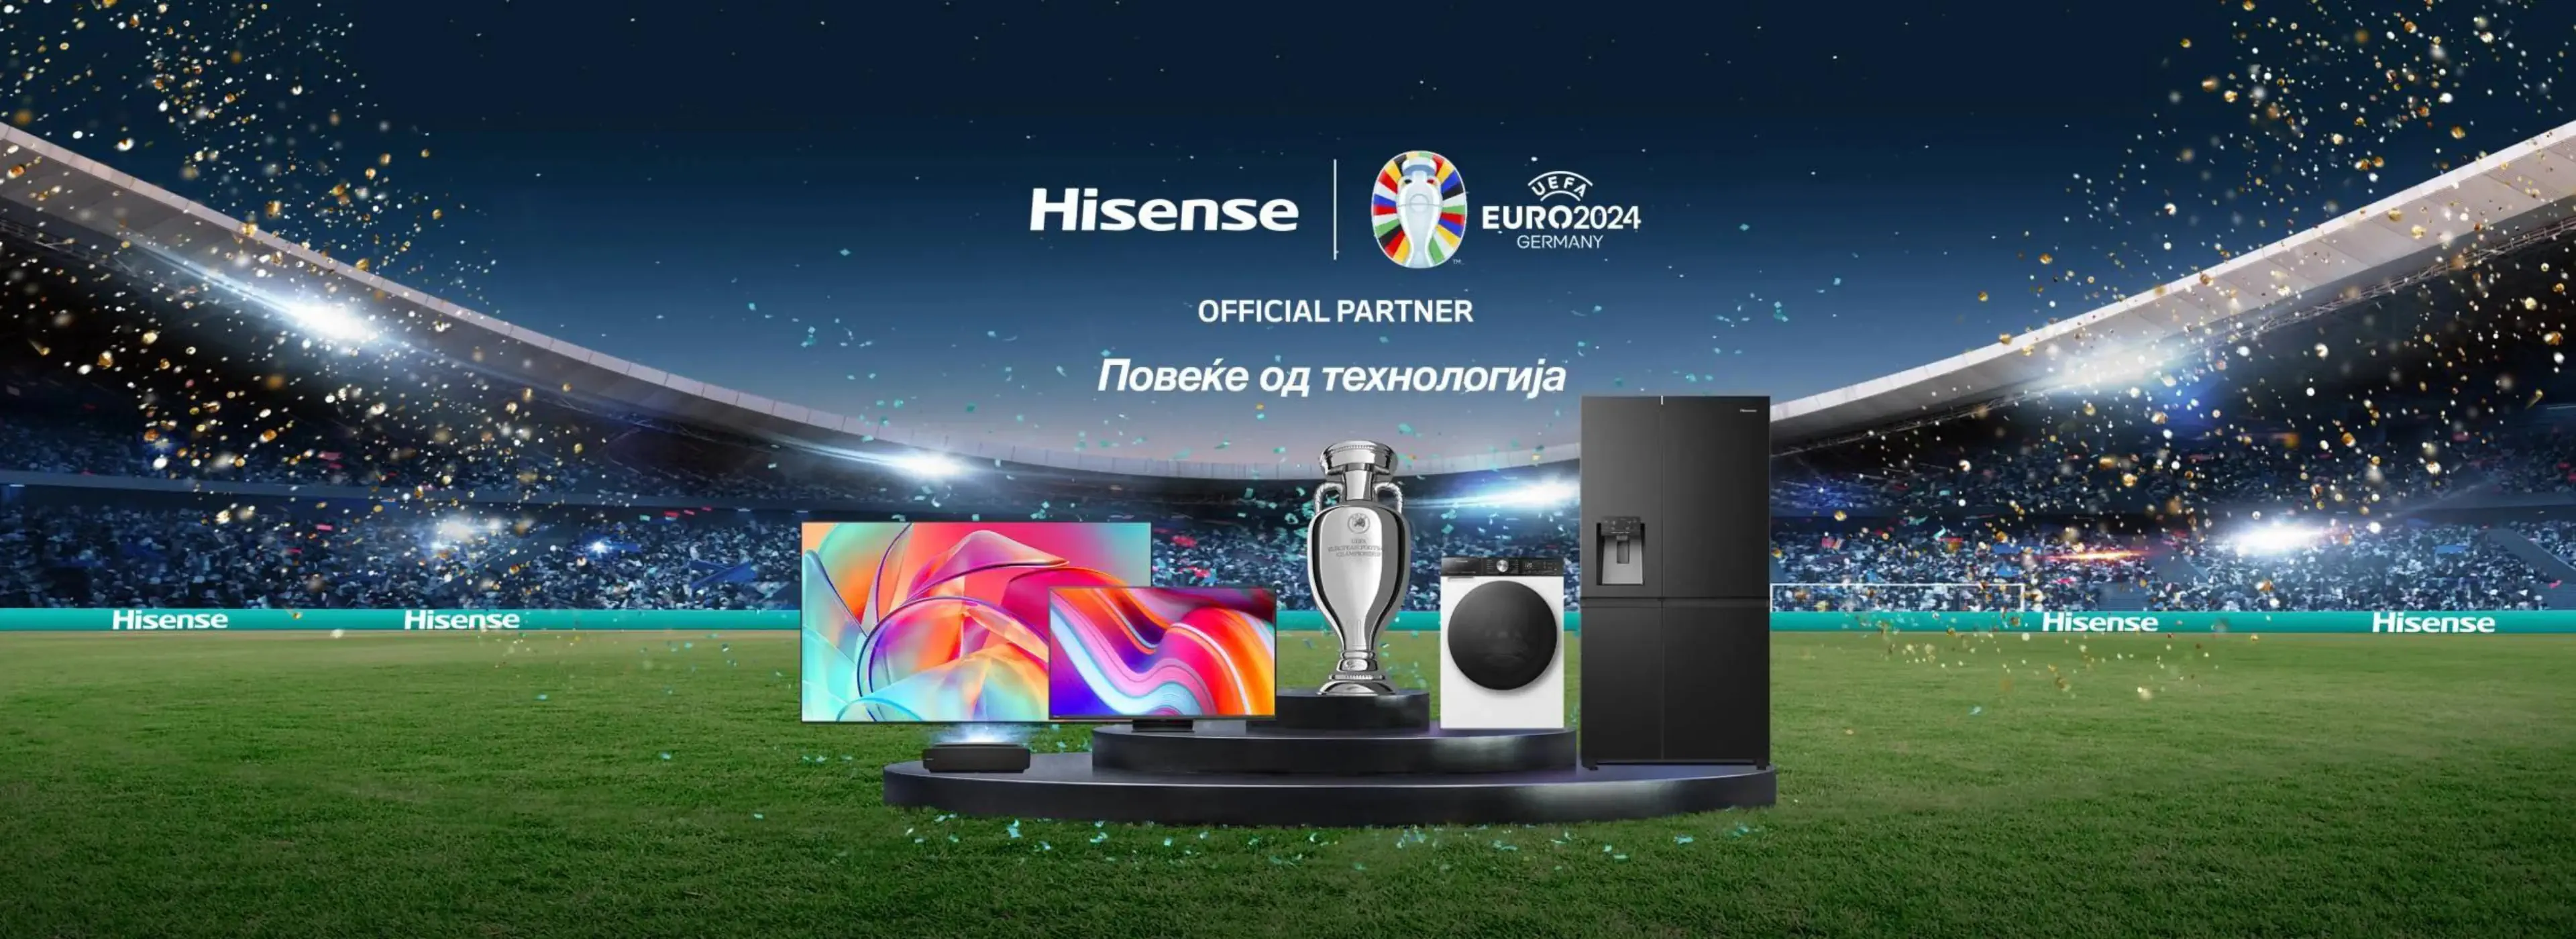 MK_Hisense_e_oficijalen_partner_na_UEFA_EURO_2024_banner_desktop-3840x1400.webp